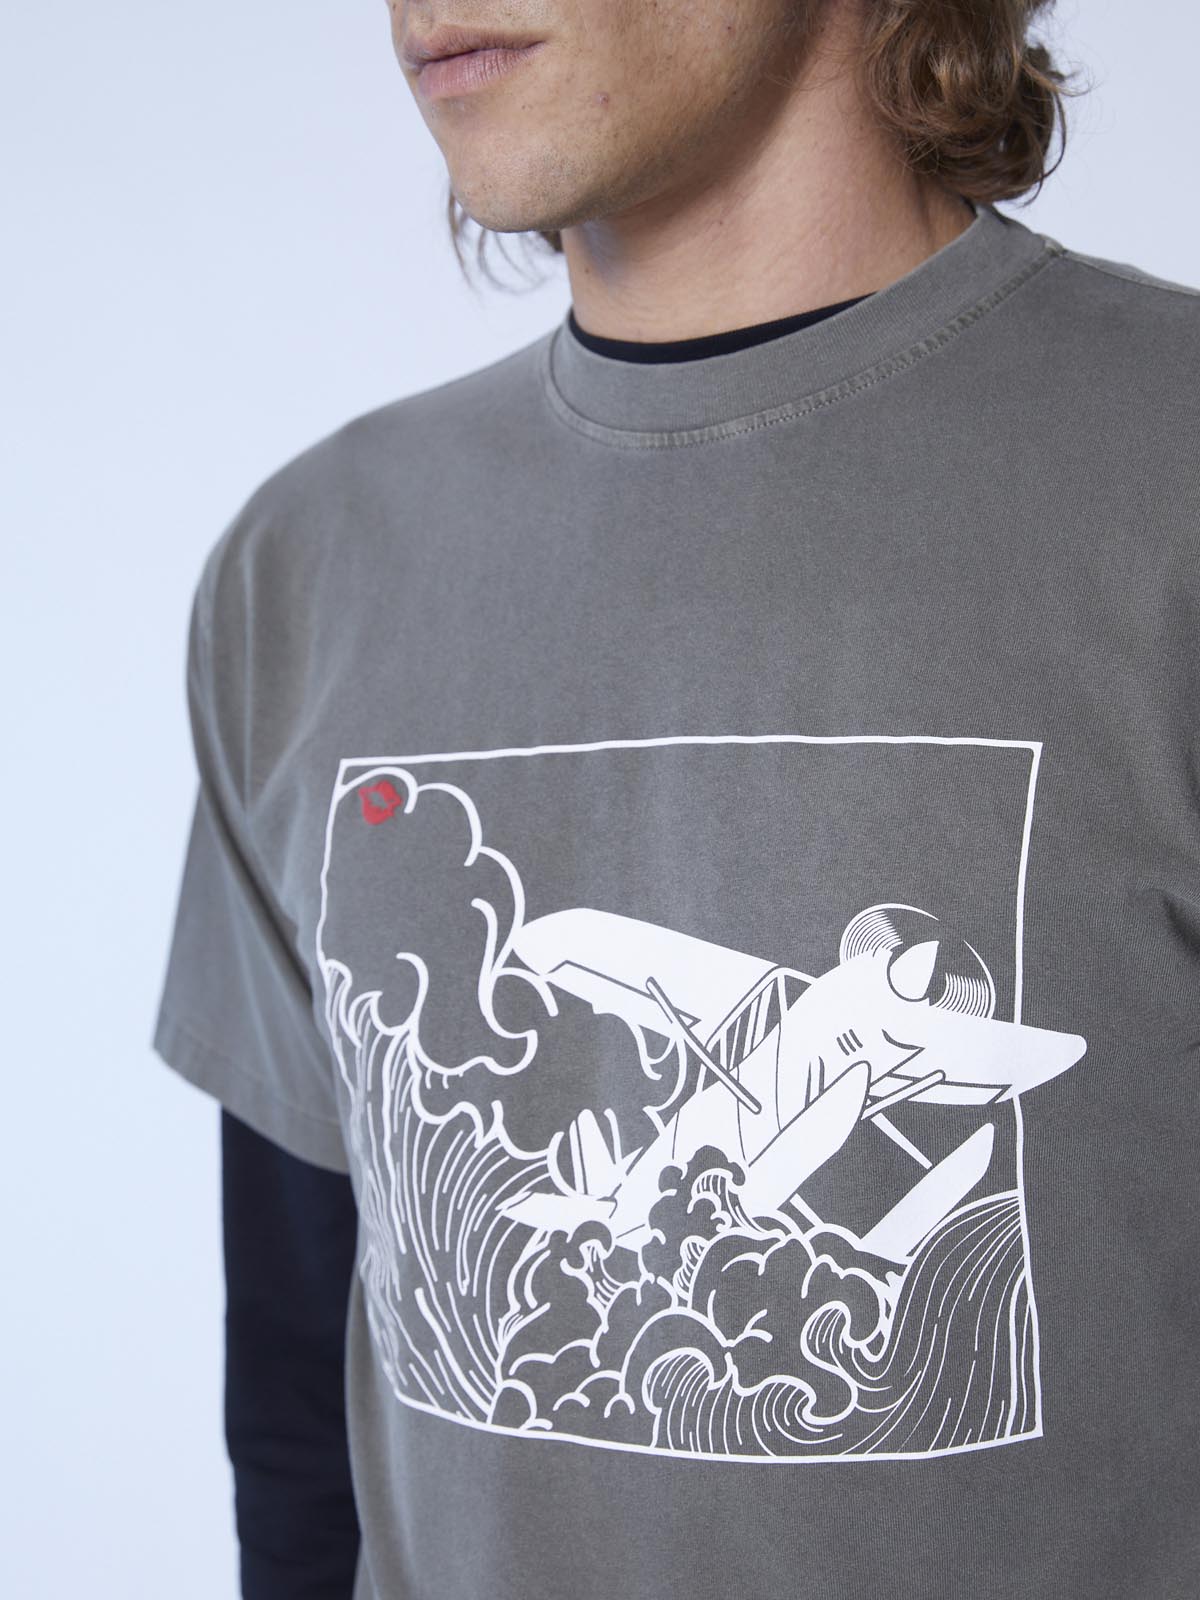 Kona T-shirt stampa Hokusai Air Surfer